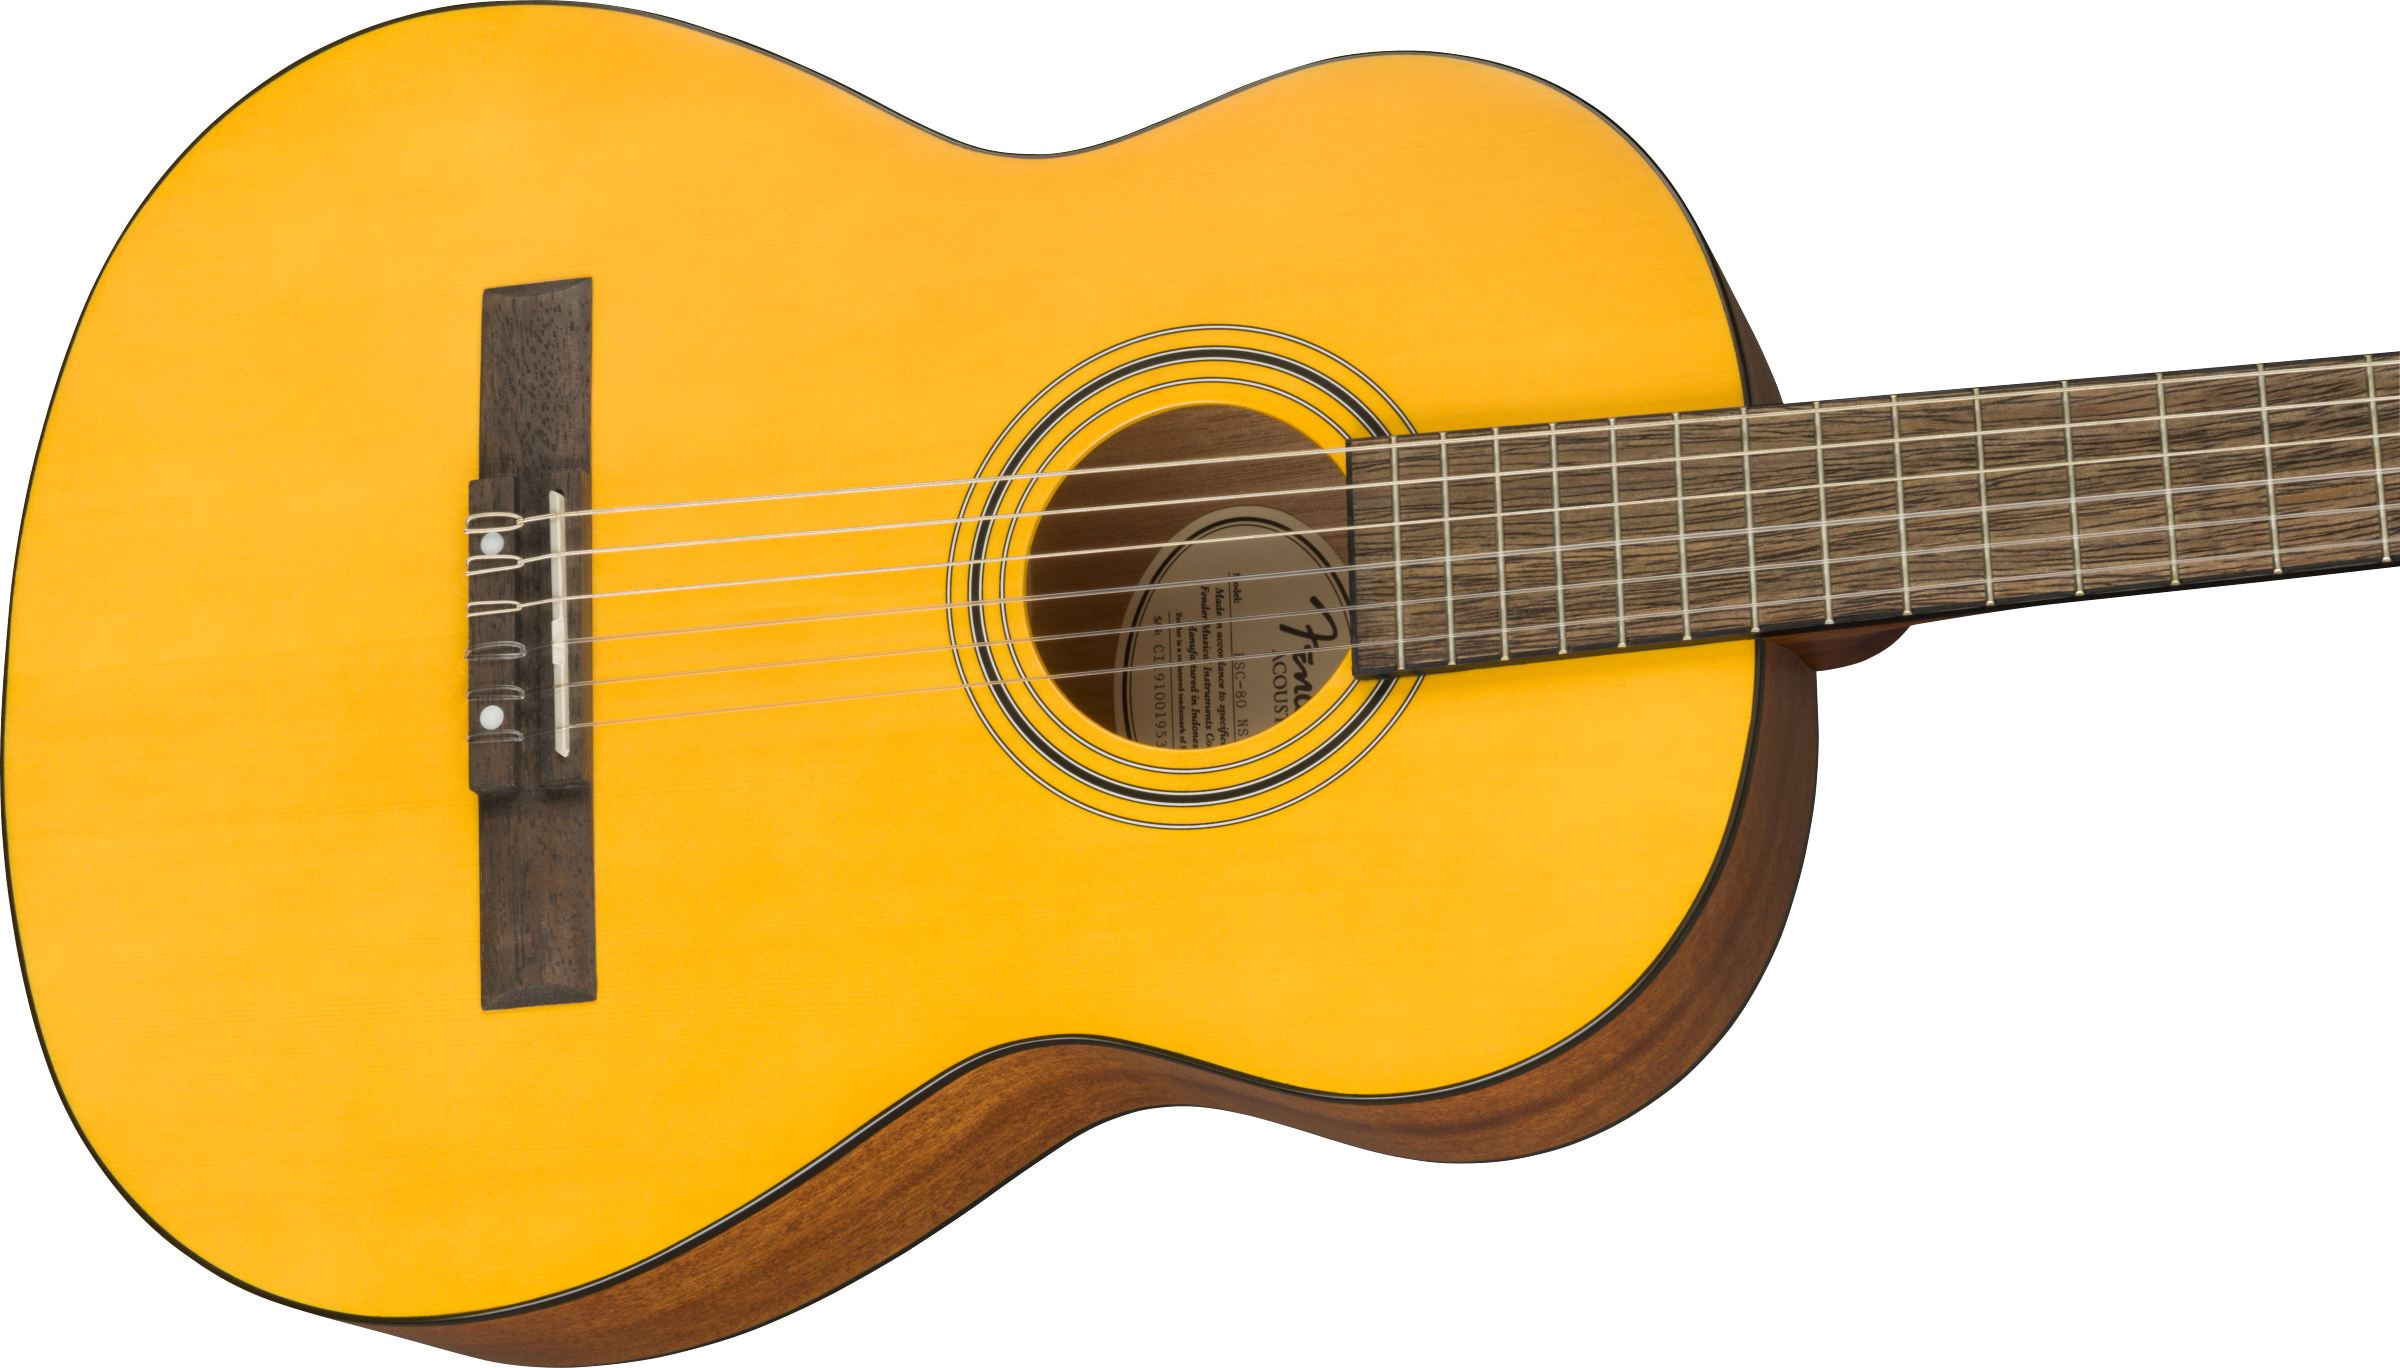 Fender Esc 80 Classical - Naturel - Classical guitar 4/4 size - Variation 2